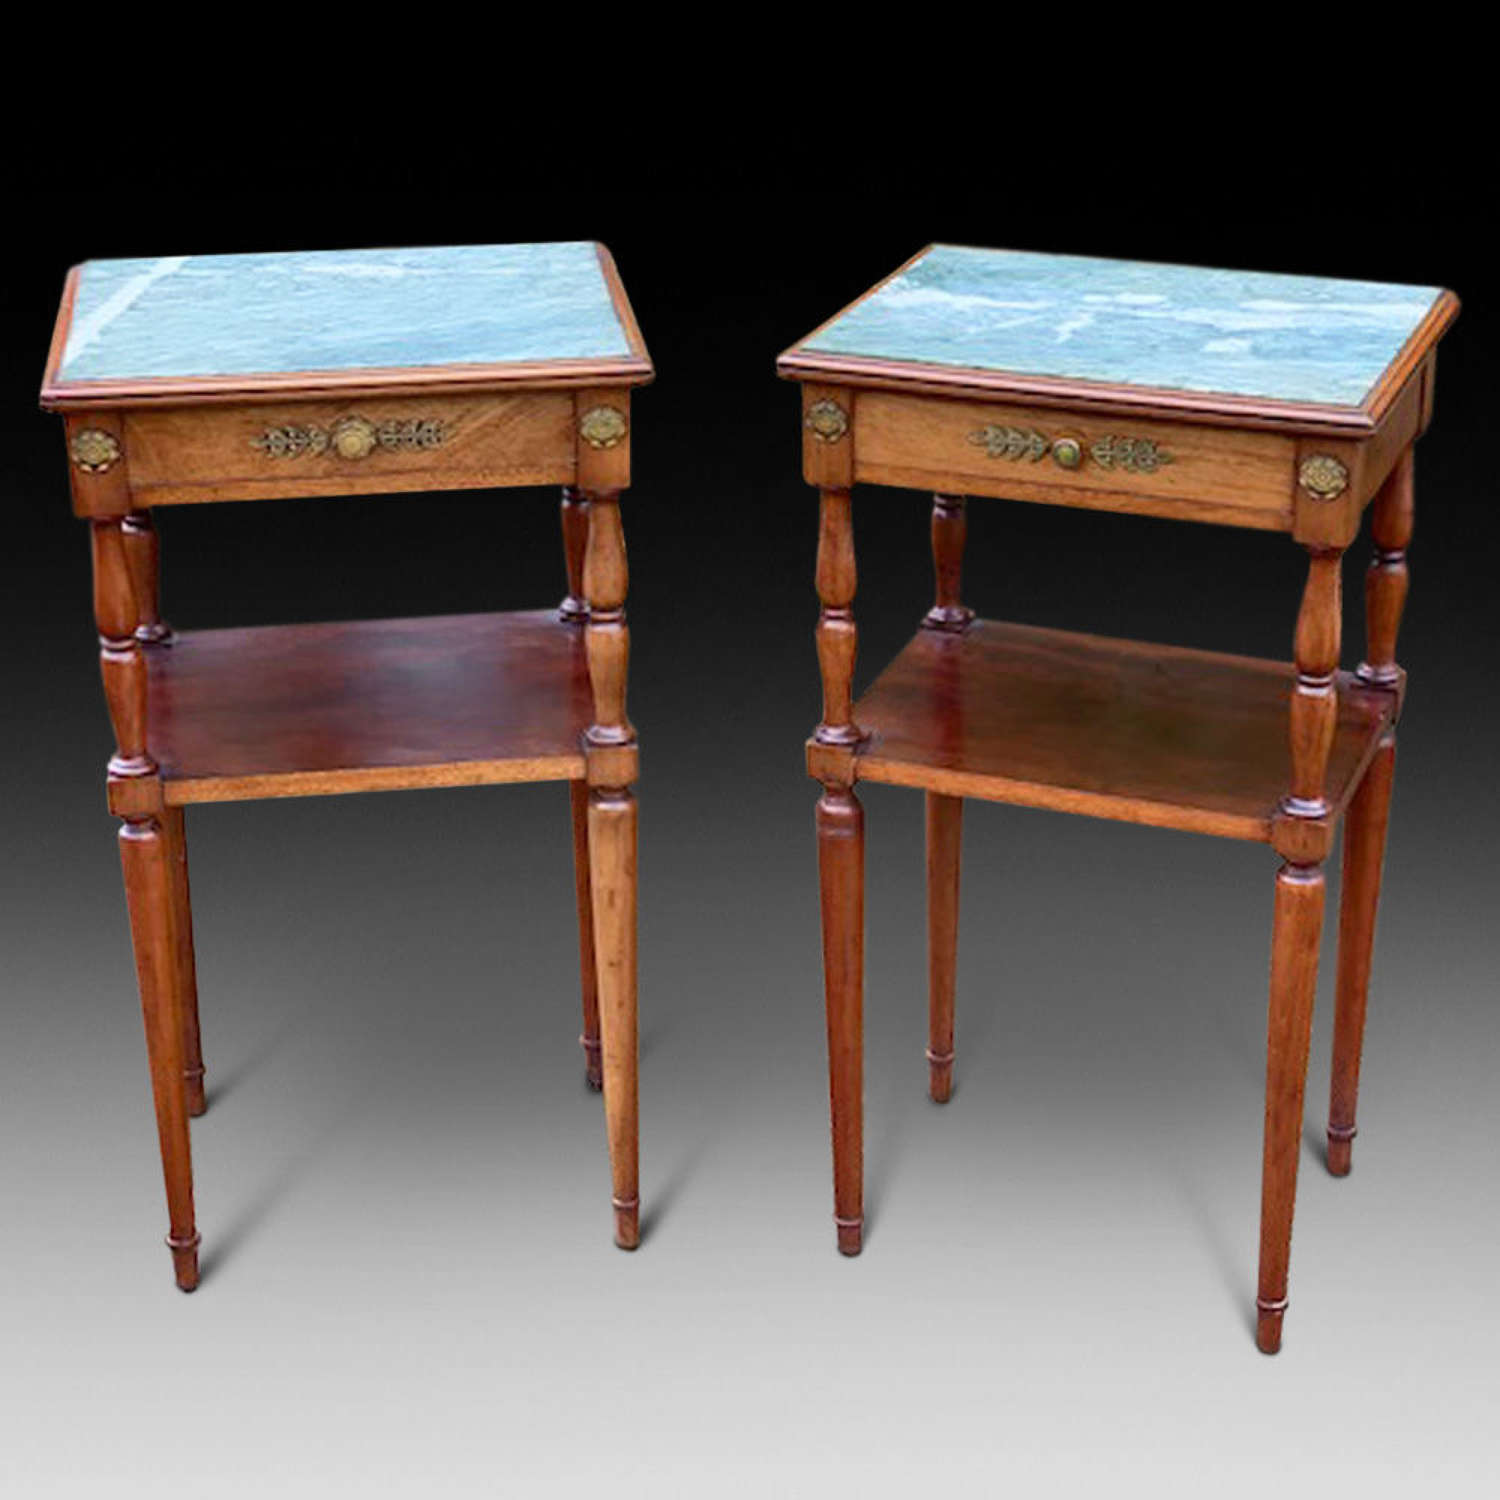 Elegant Pair of Mahogany Side Tables c.1900-1910